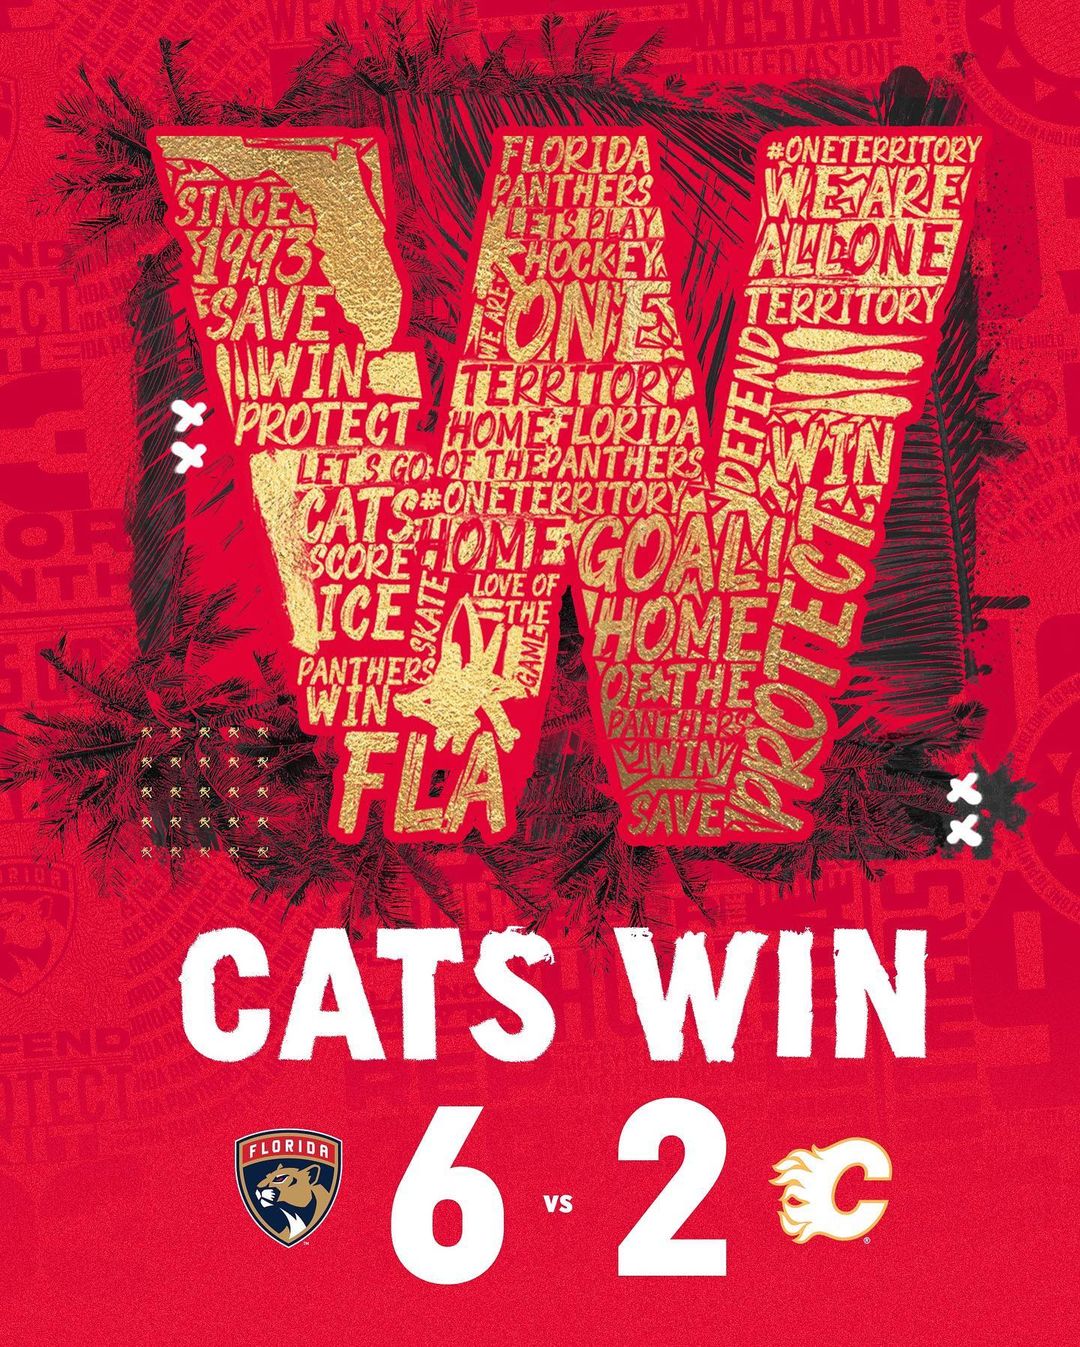 CATS WIN!!!!!!!!!...